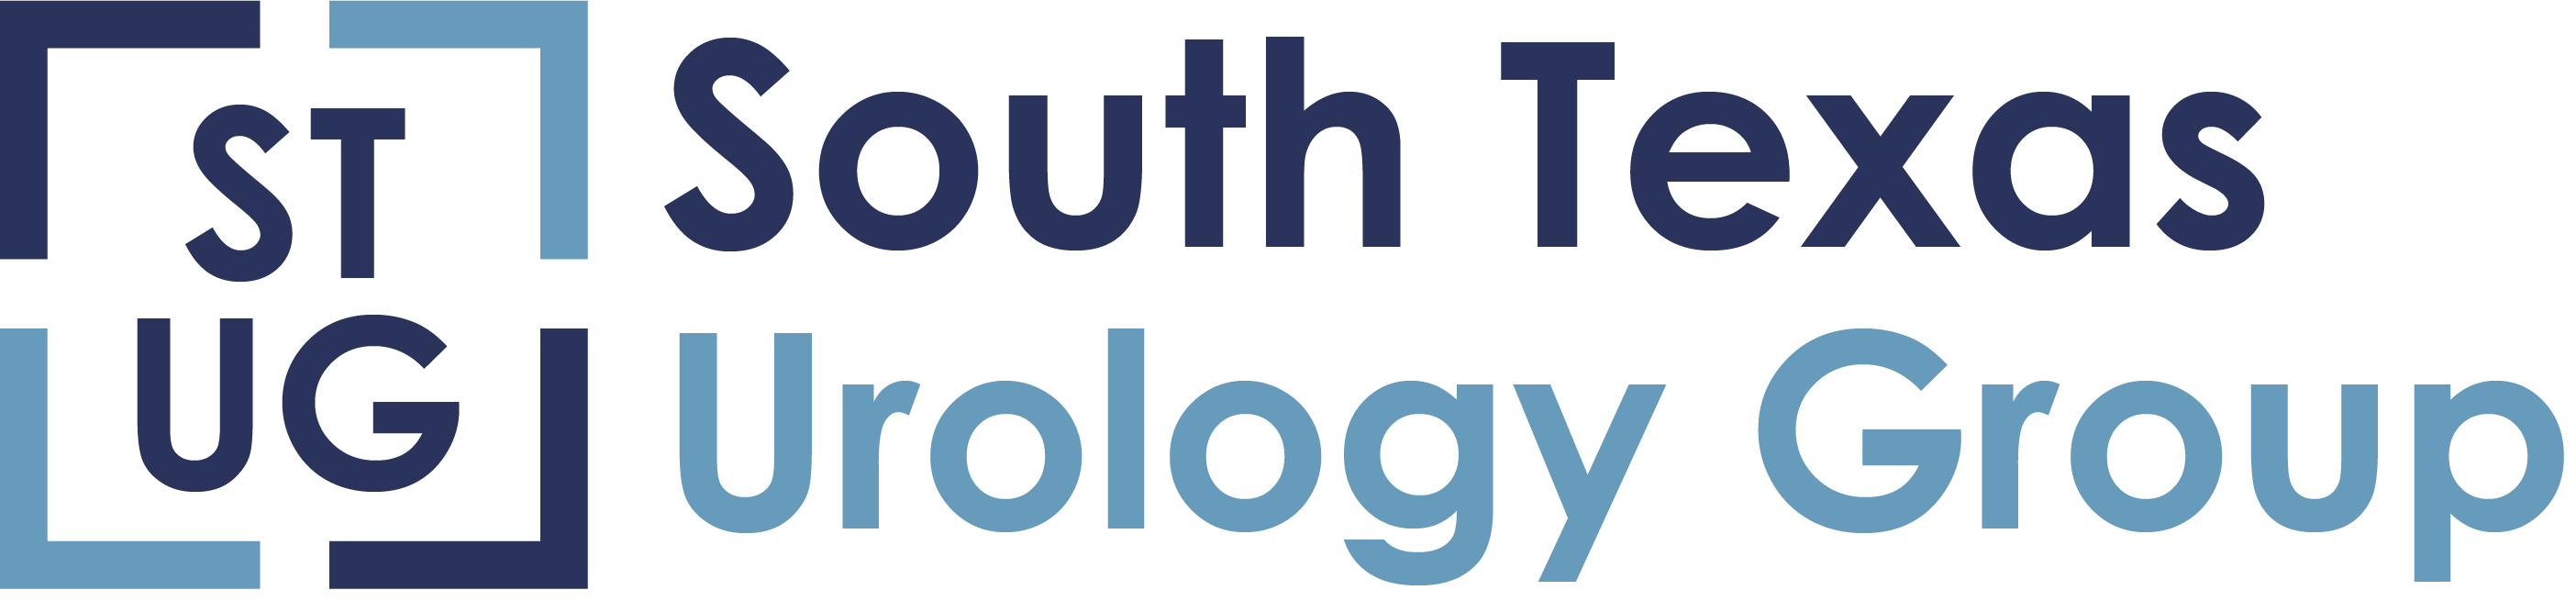 South Texas Urology Group logo